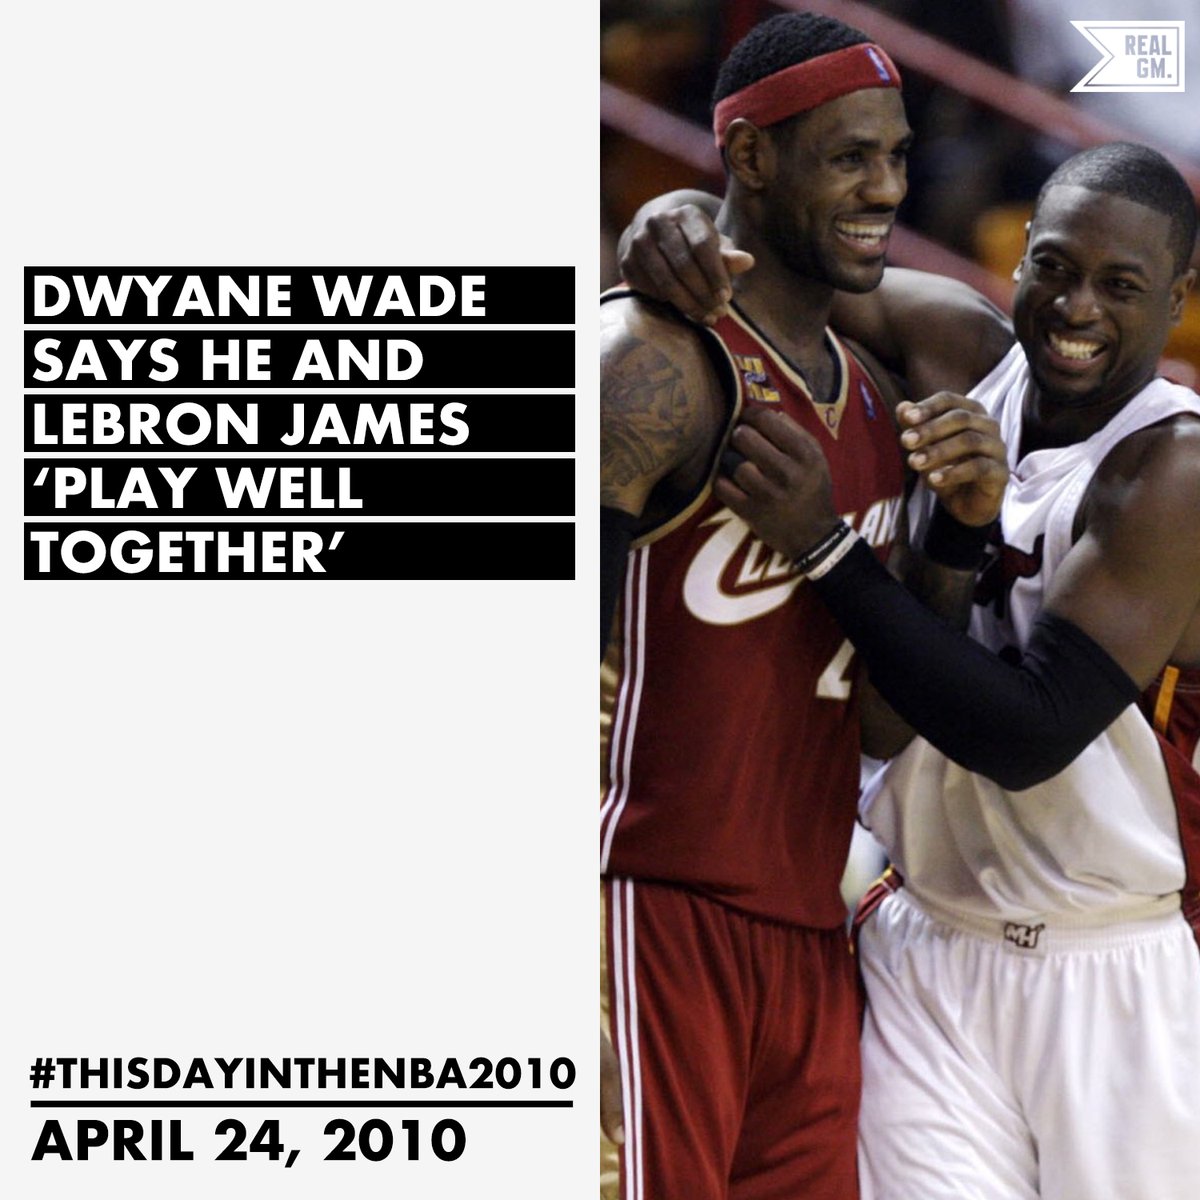  #ThisDayInTheNBA2010April 24, 2010Dwyane Wade Says He And LeBron James 'Play Well Together' https://basketball.realgm.com/wiretap/203495/Dwyane-Wade-Says-He-And-LeBron-James-Play-Well-Together